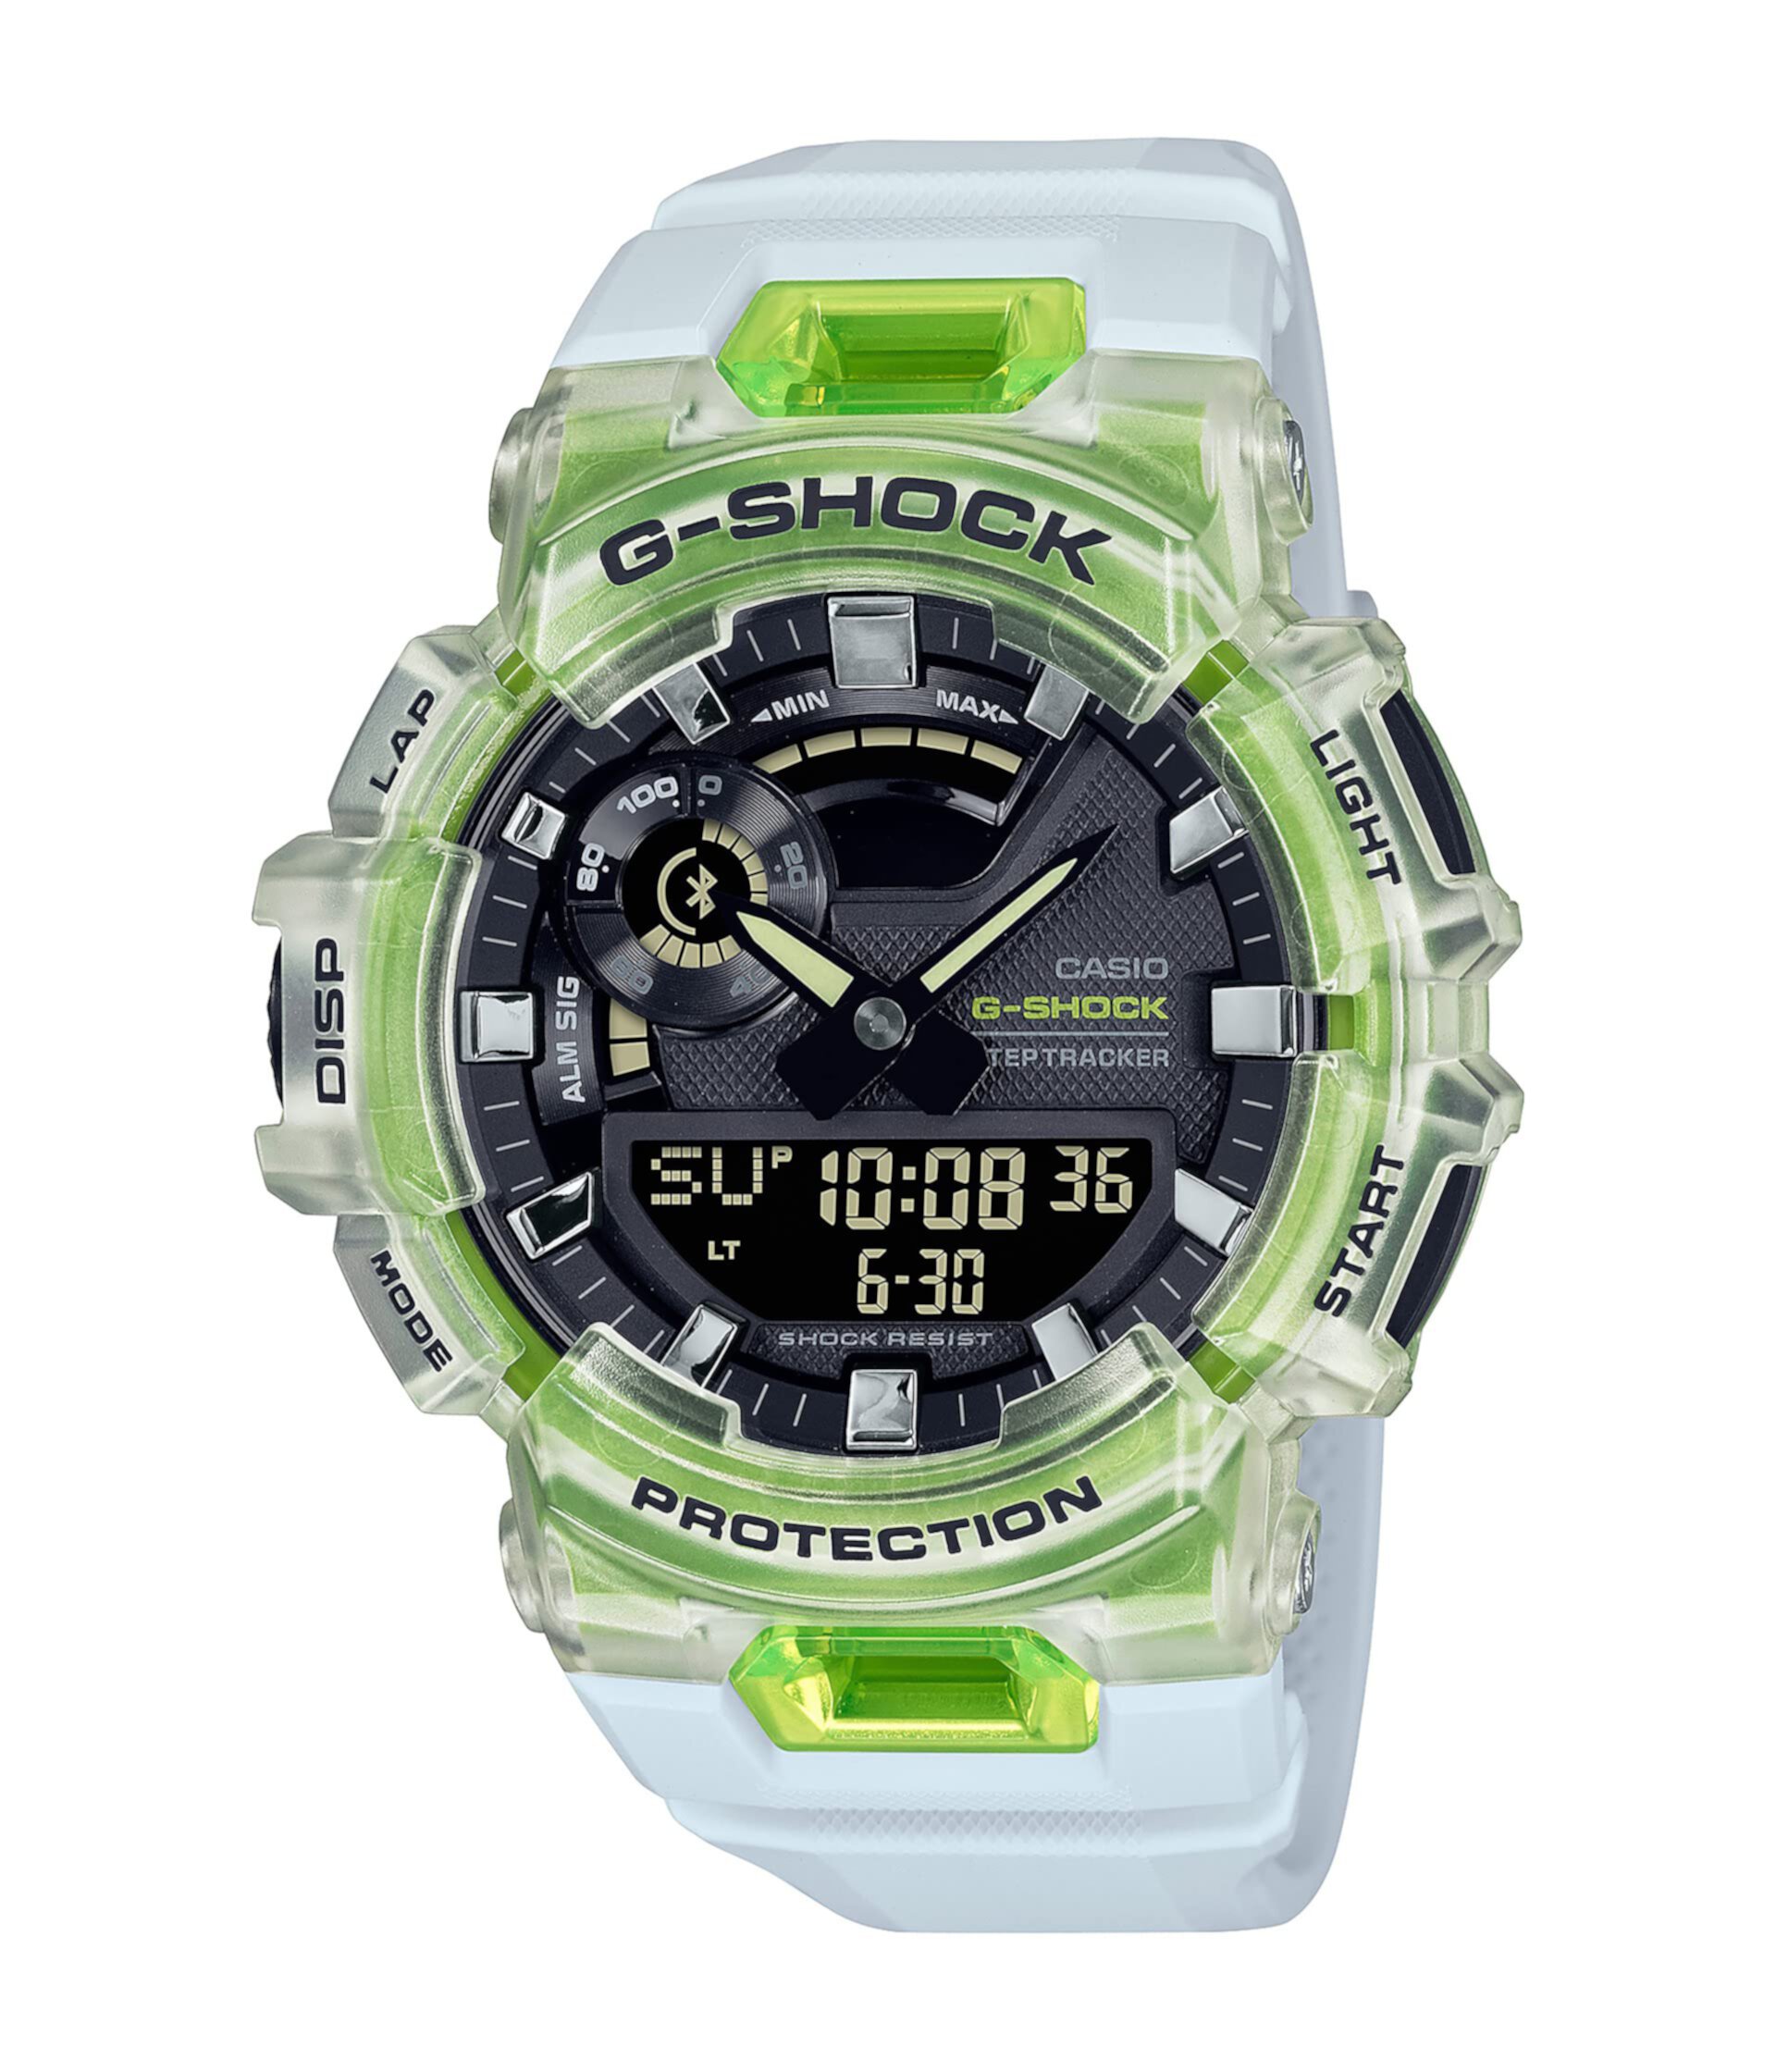 GBA900SM-7A9 G-Shock